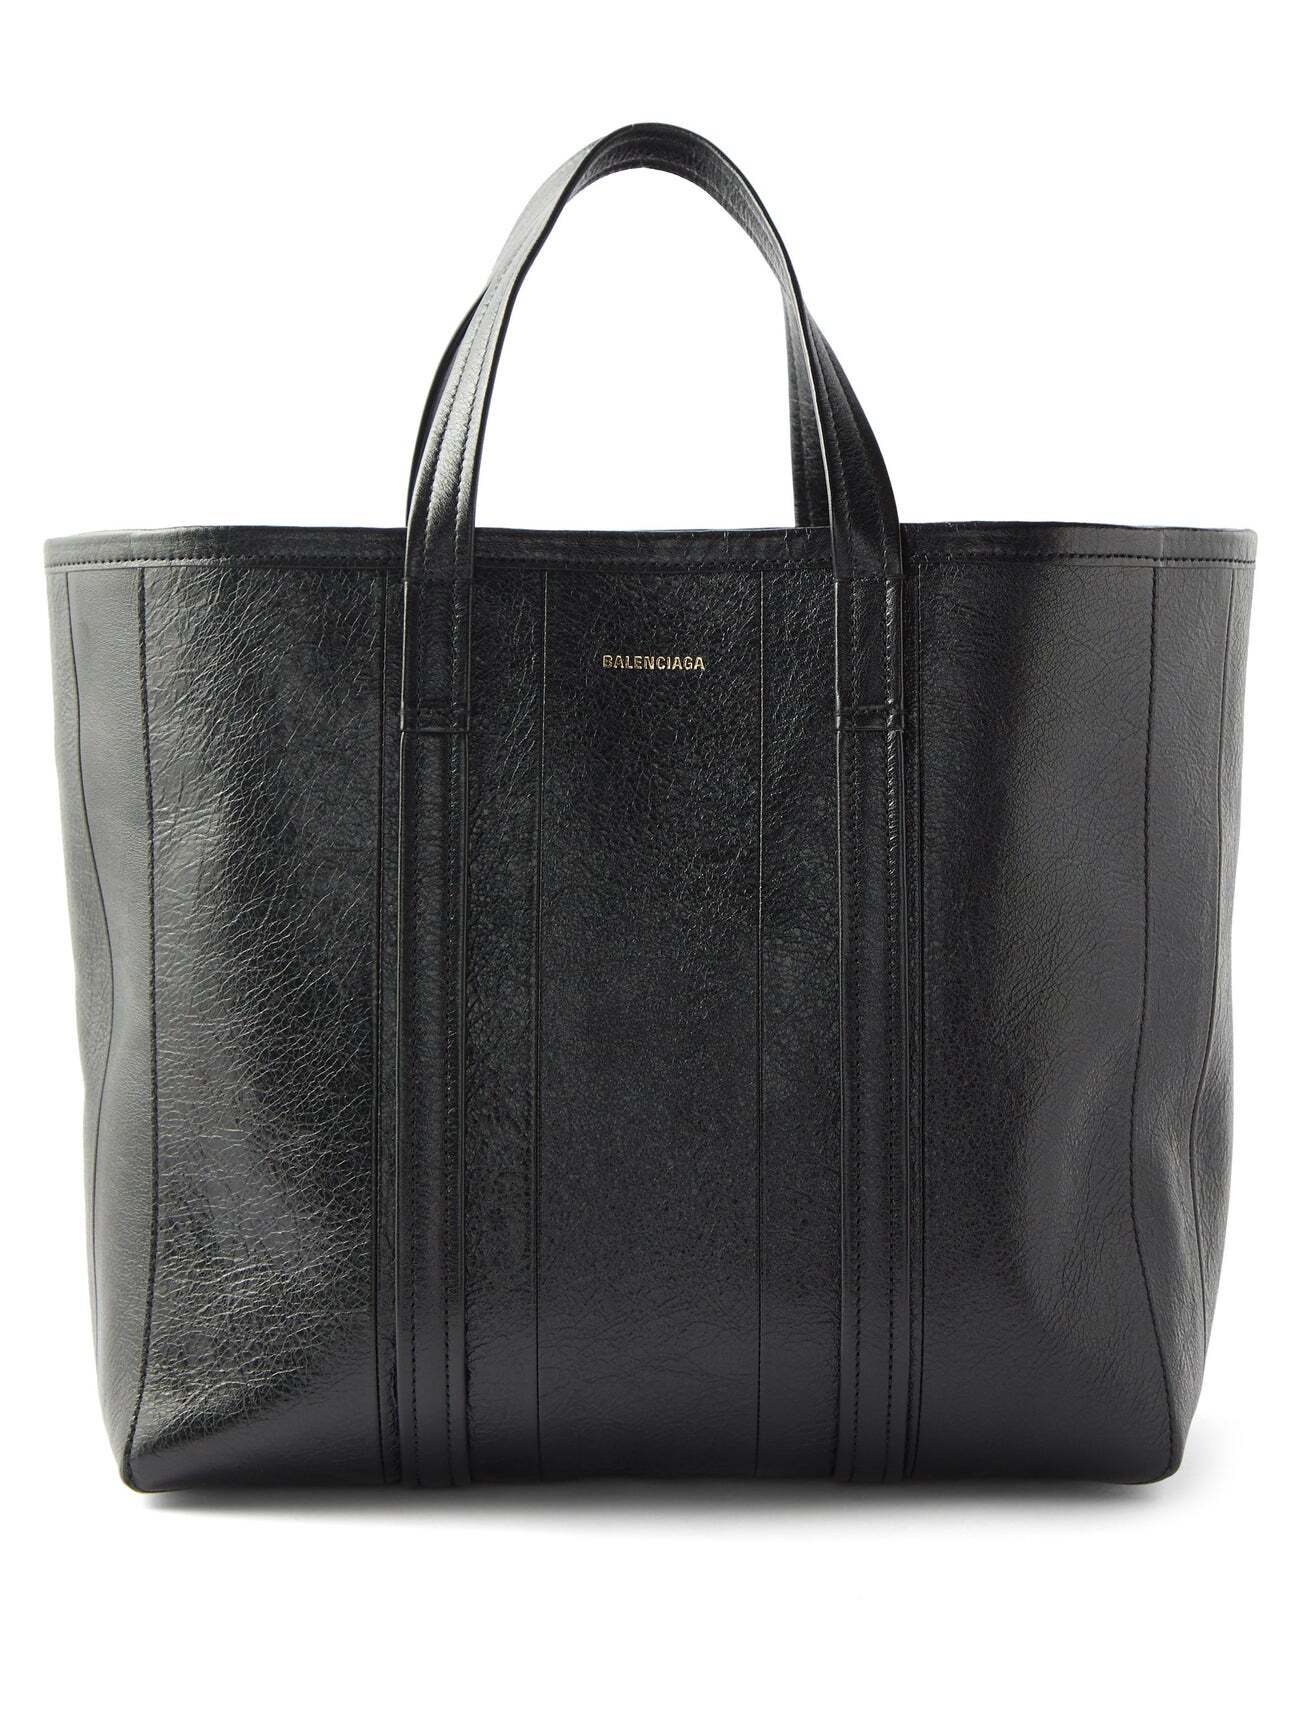 Balenciaga - Barbes M Crinkled-leather Tote Bag - Womens - Black